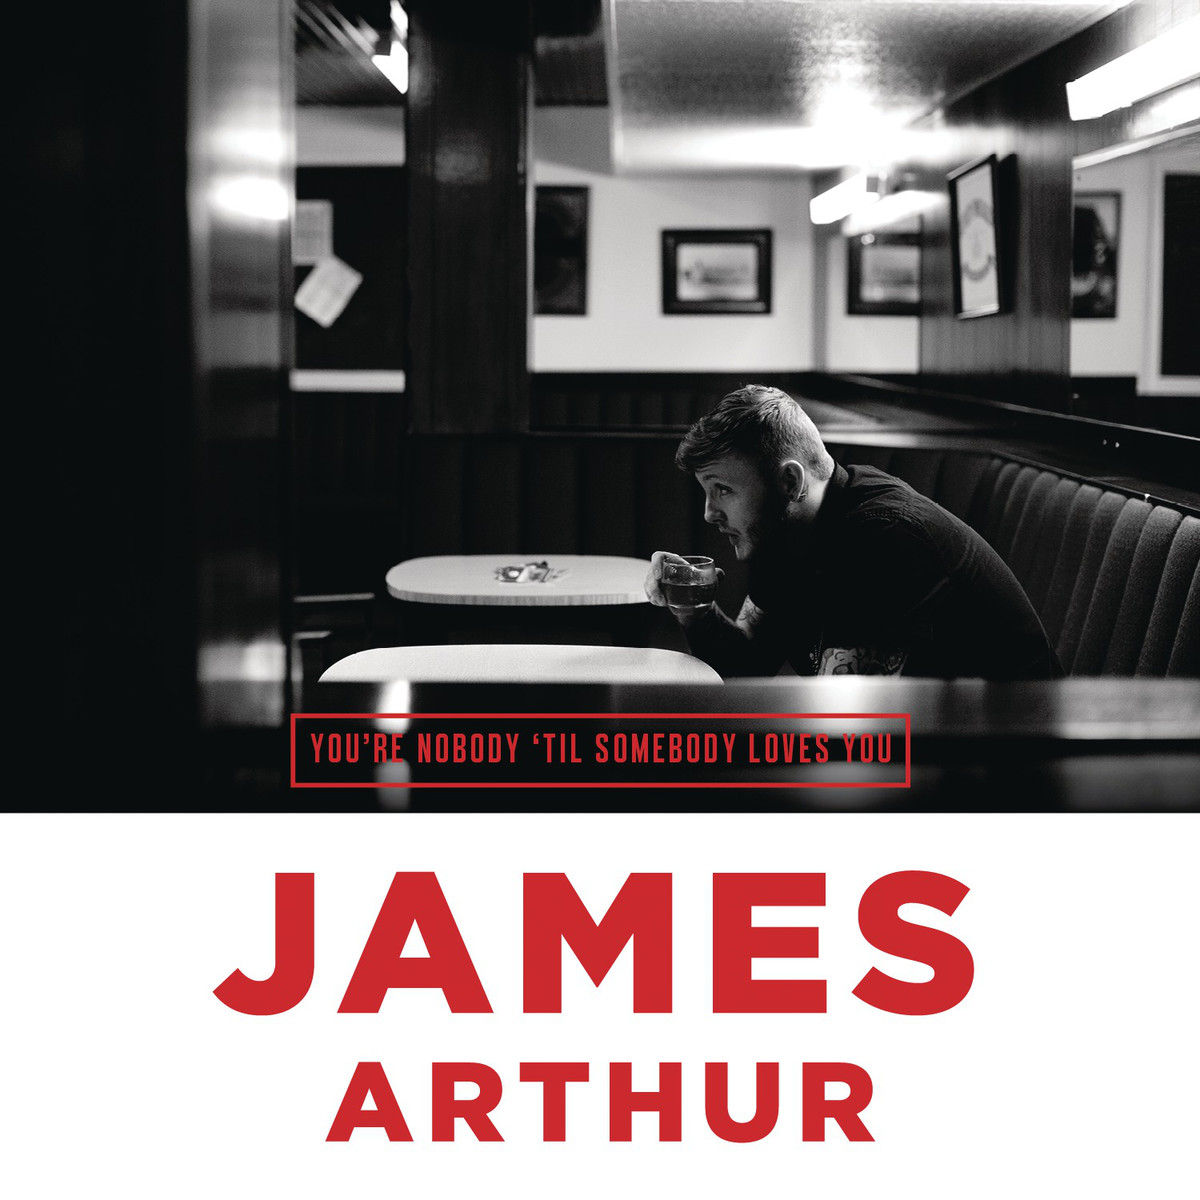 James Arthur – You’re Nobody ‘Til Somebody Loves You